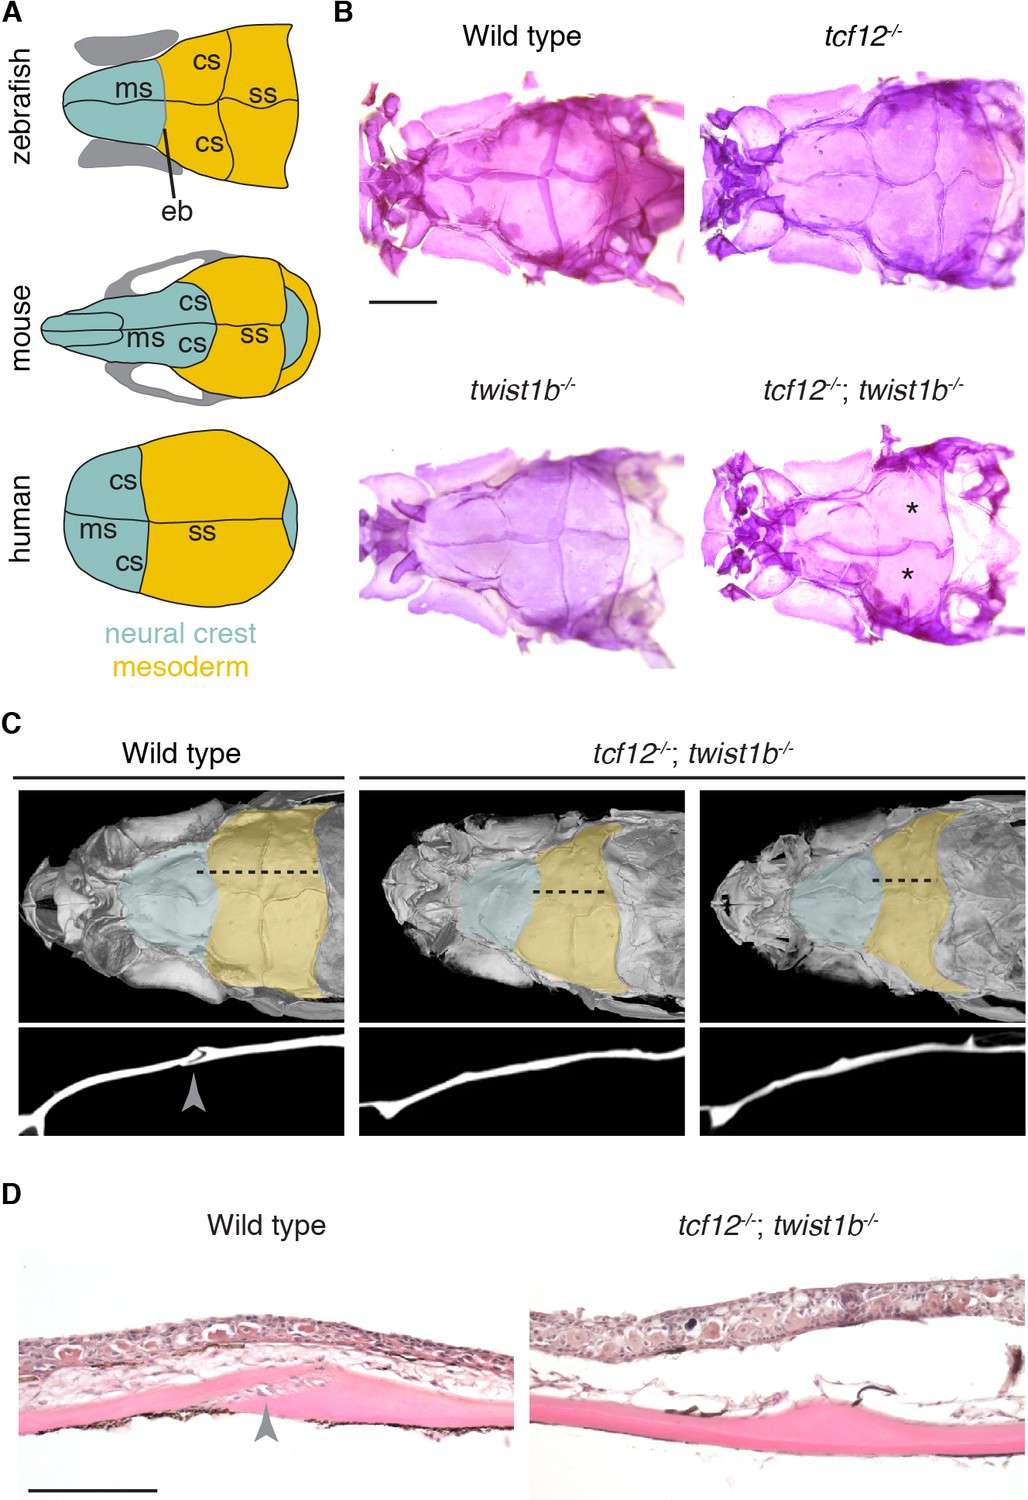 Altered bone growth dynamics prefigure craniosynostosis in a zebrafish